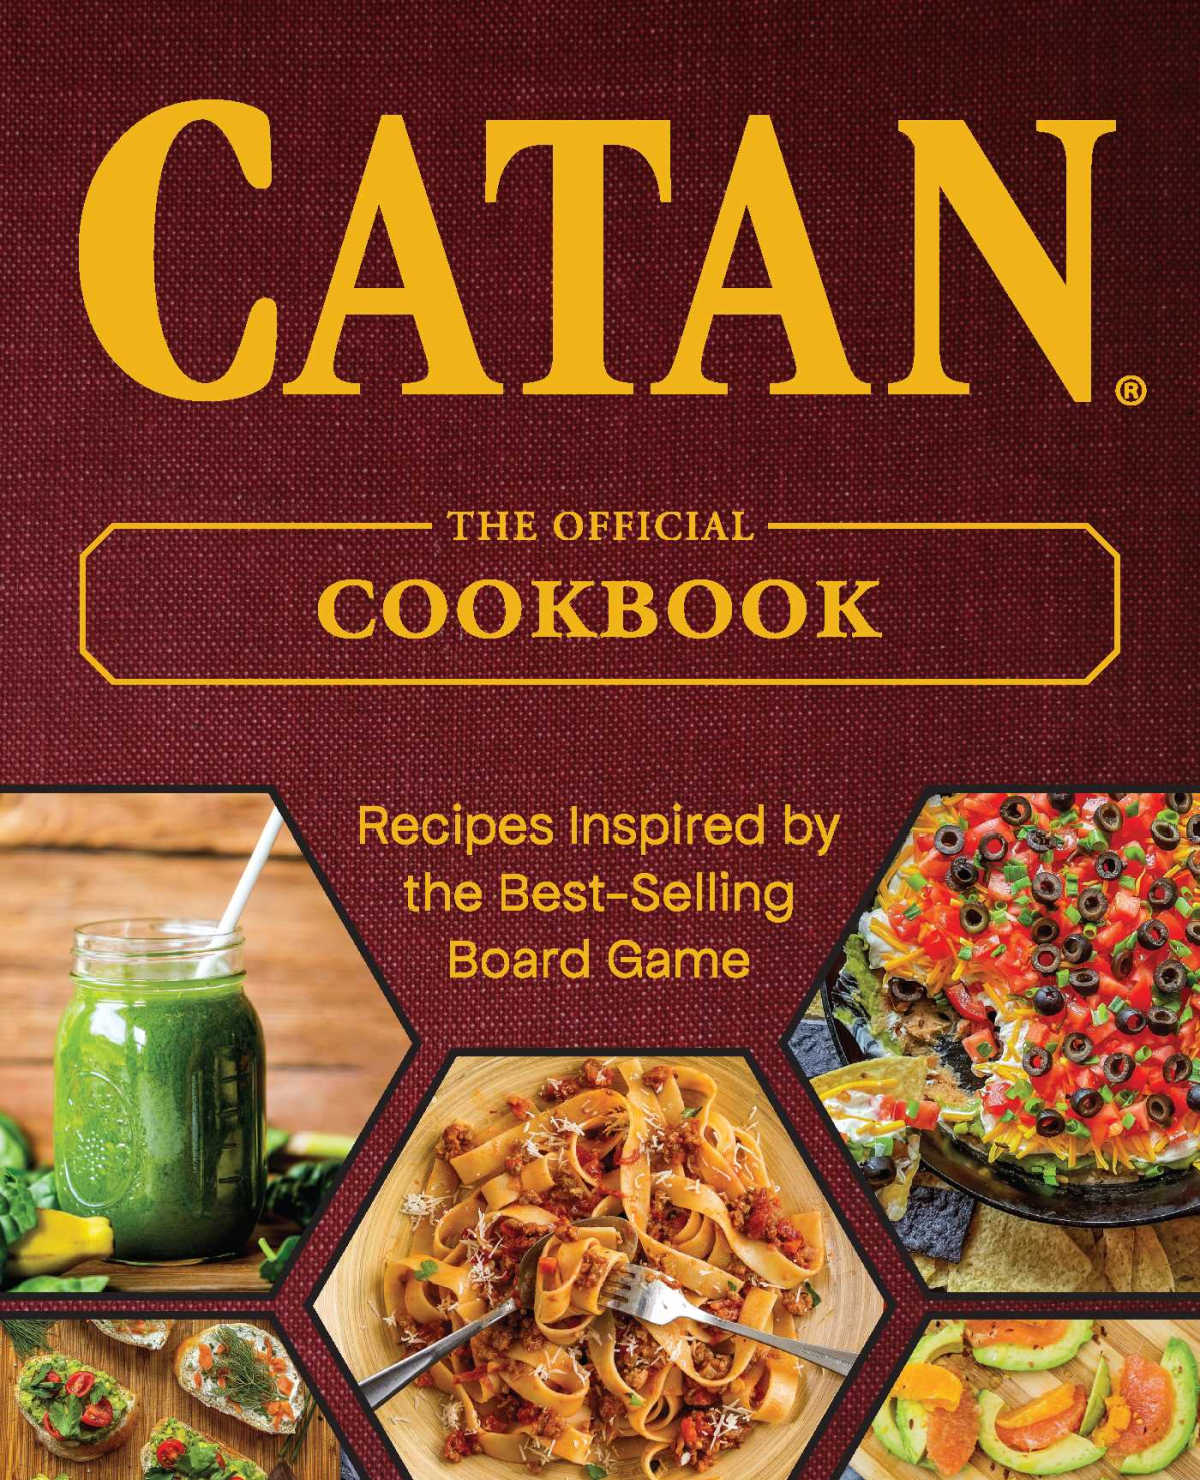 official catan cookbook